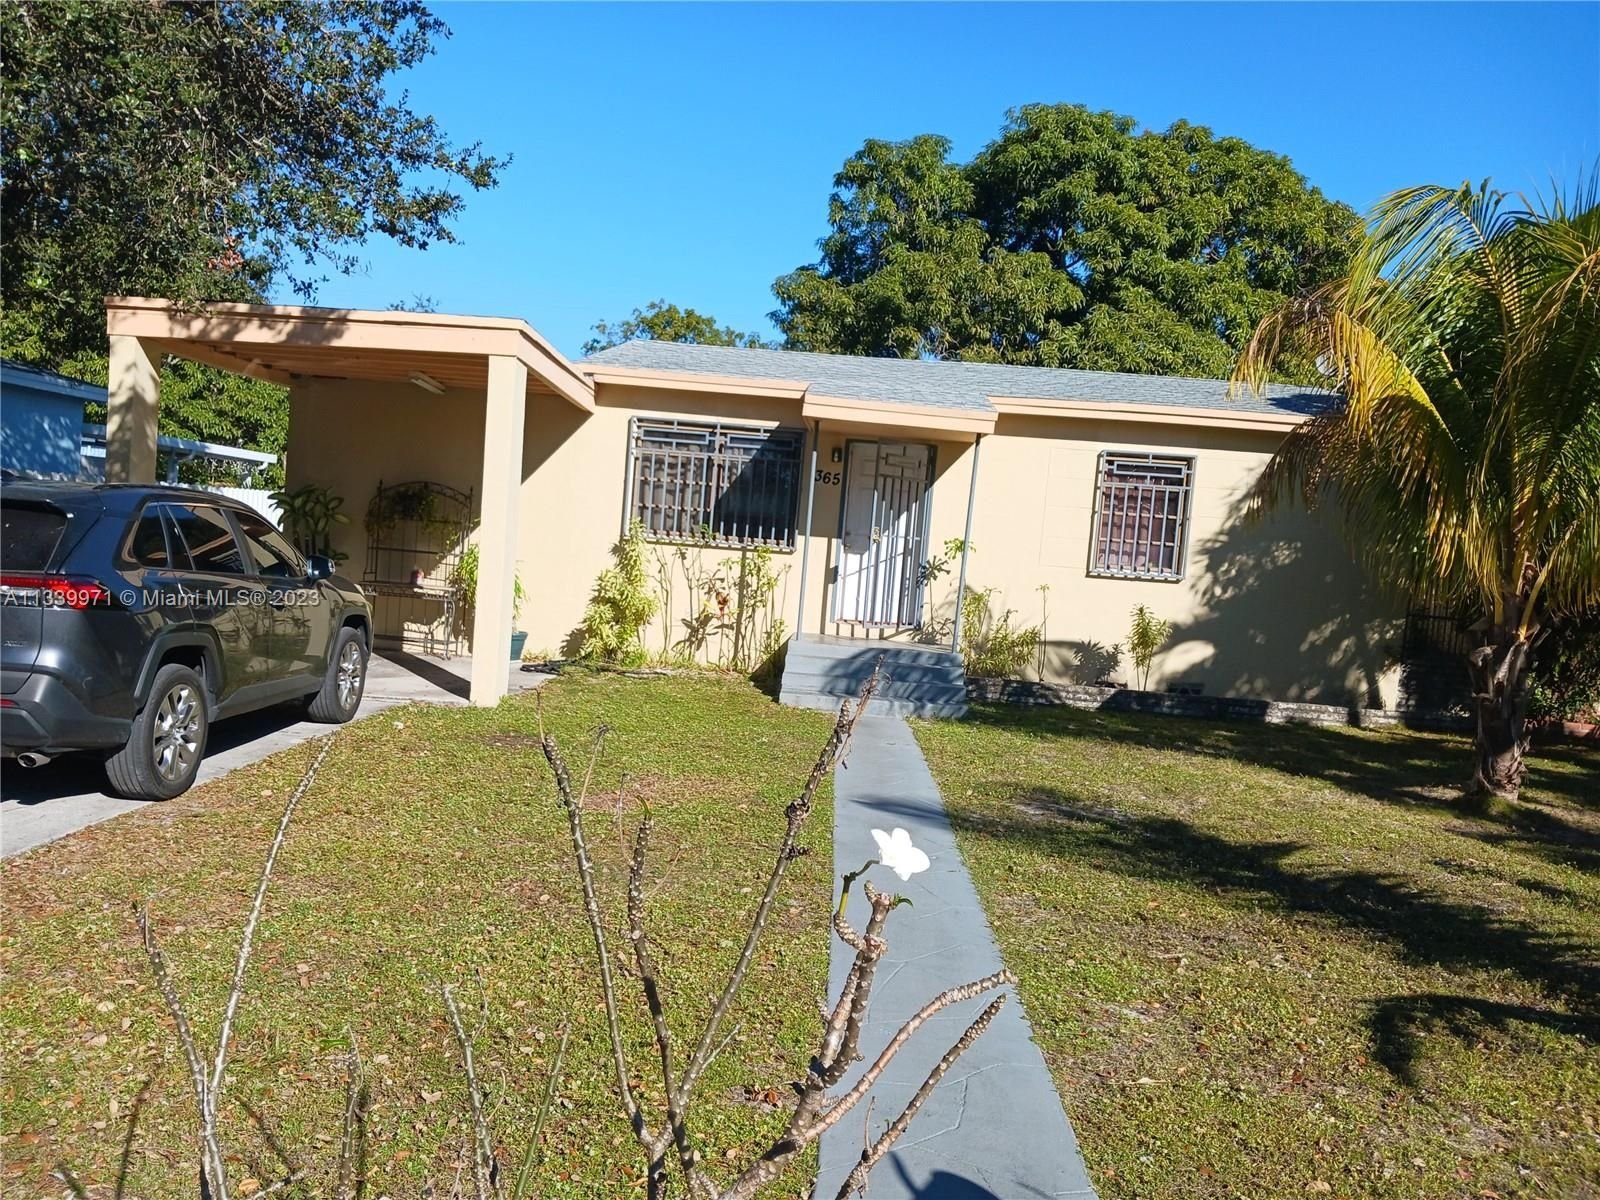 Real estate property located at 365 128th St, Miami-Dade County, North Miami, FL